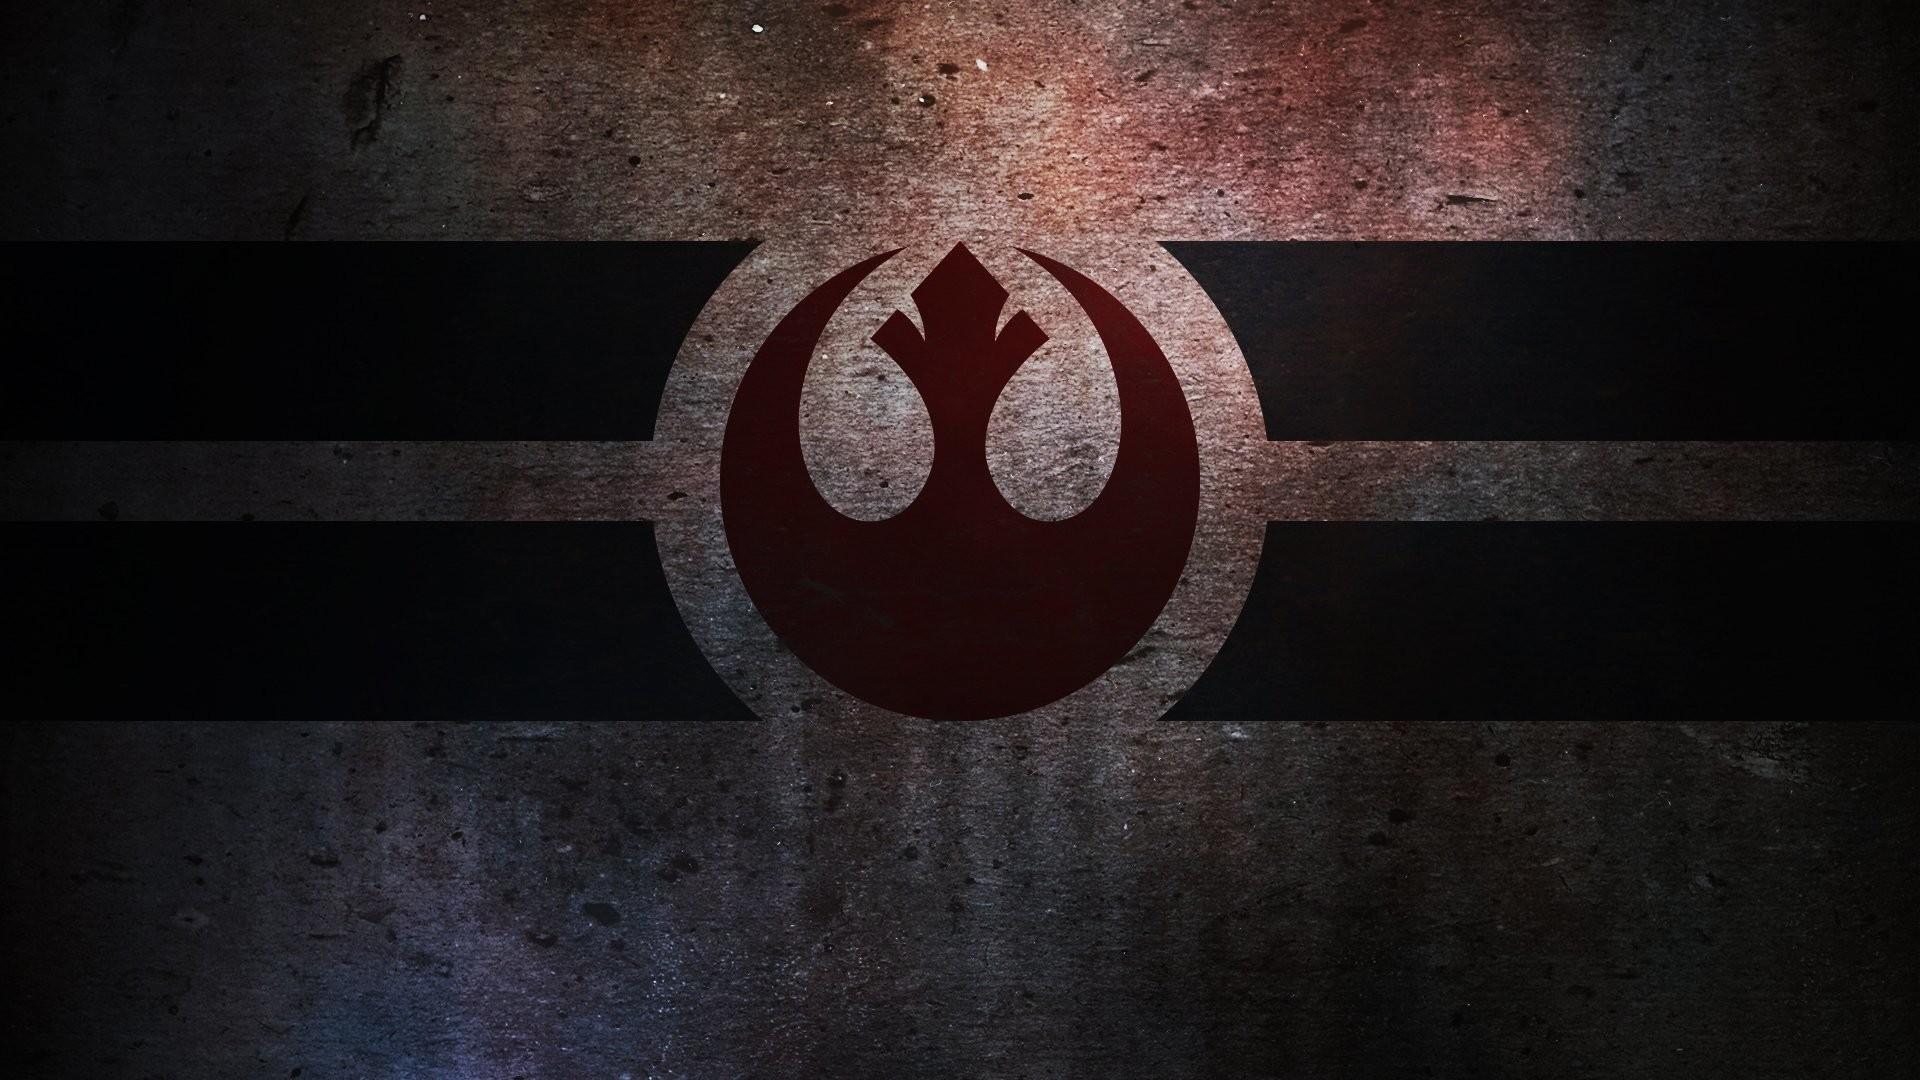 1920x1080 Star Wars Rebel Logo Desktop Wallpapers